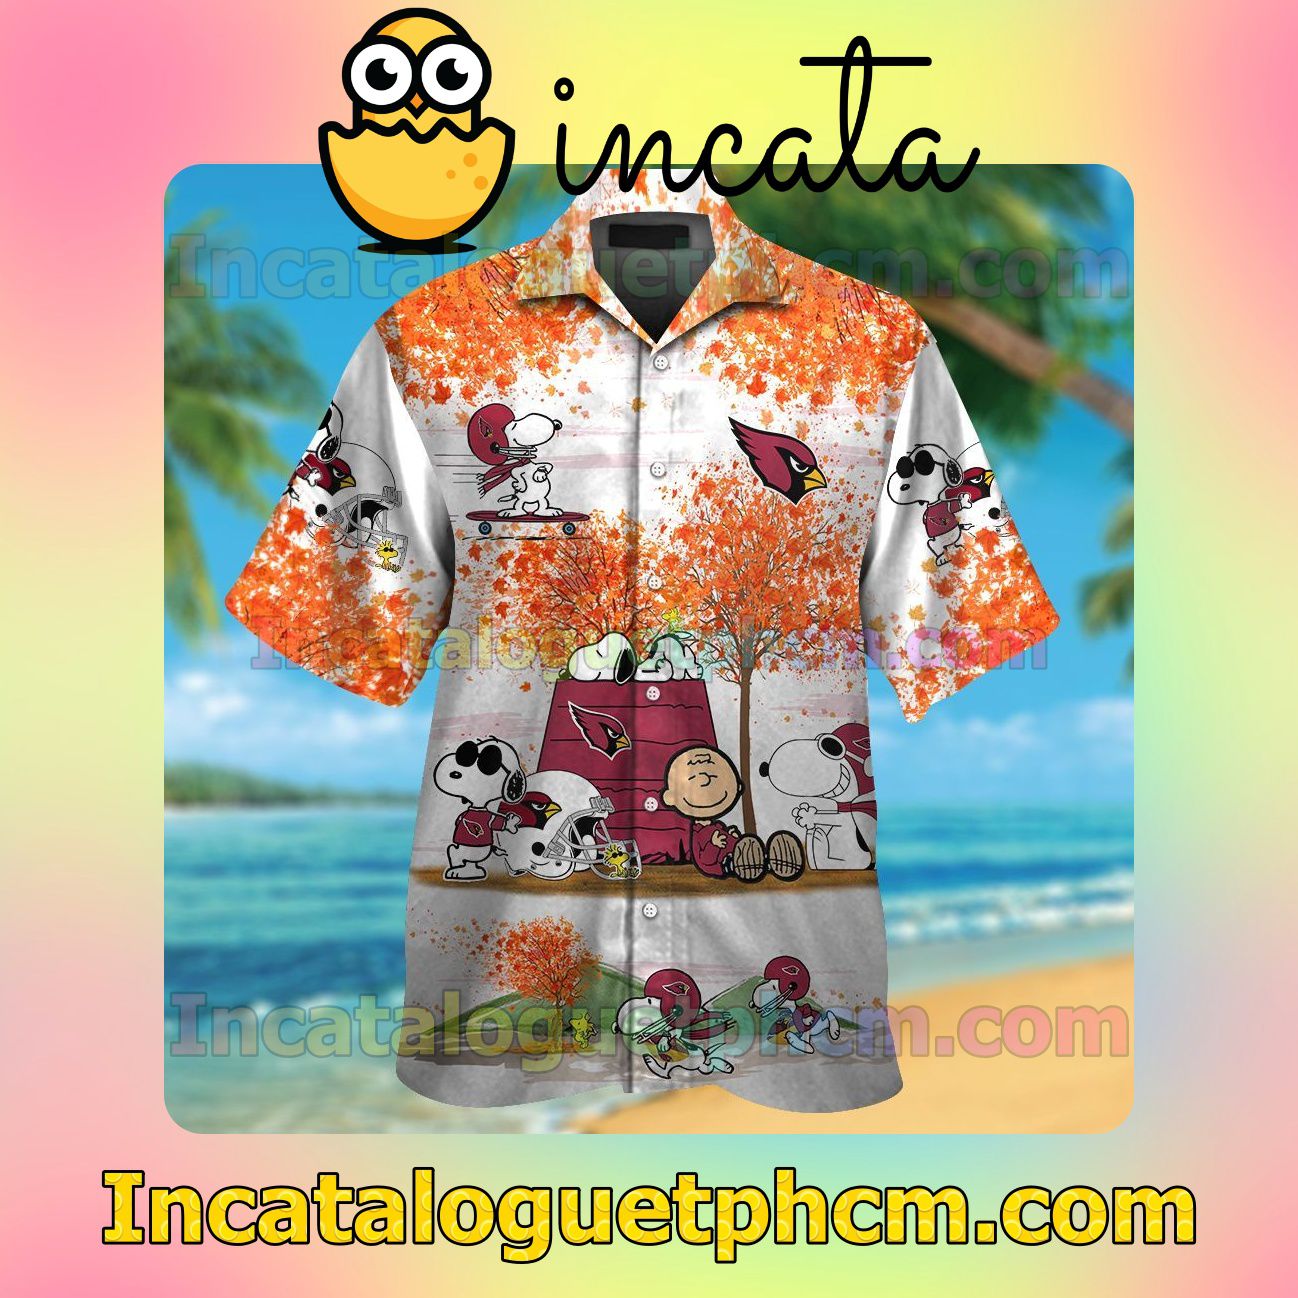 Arizona Cardinals Snoopy Autumn Beach Vacation Shirt, Swim Shorts